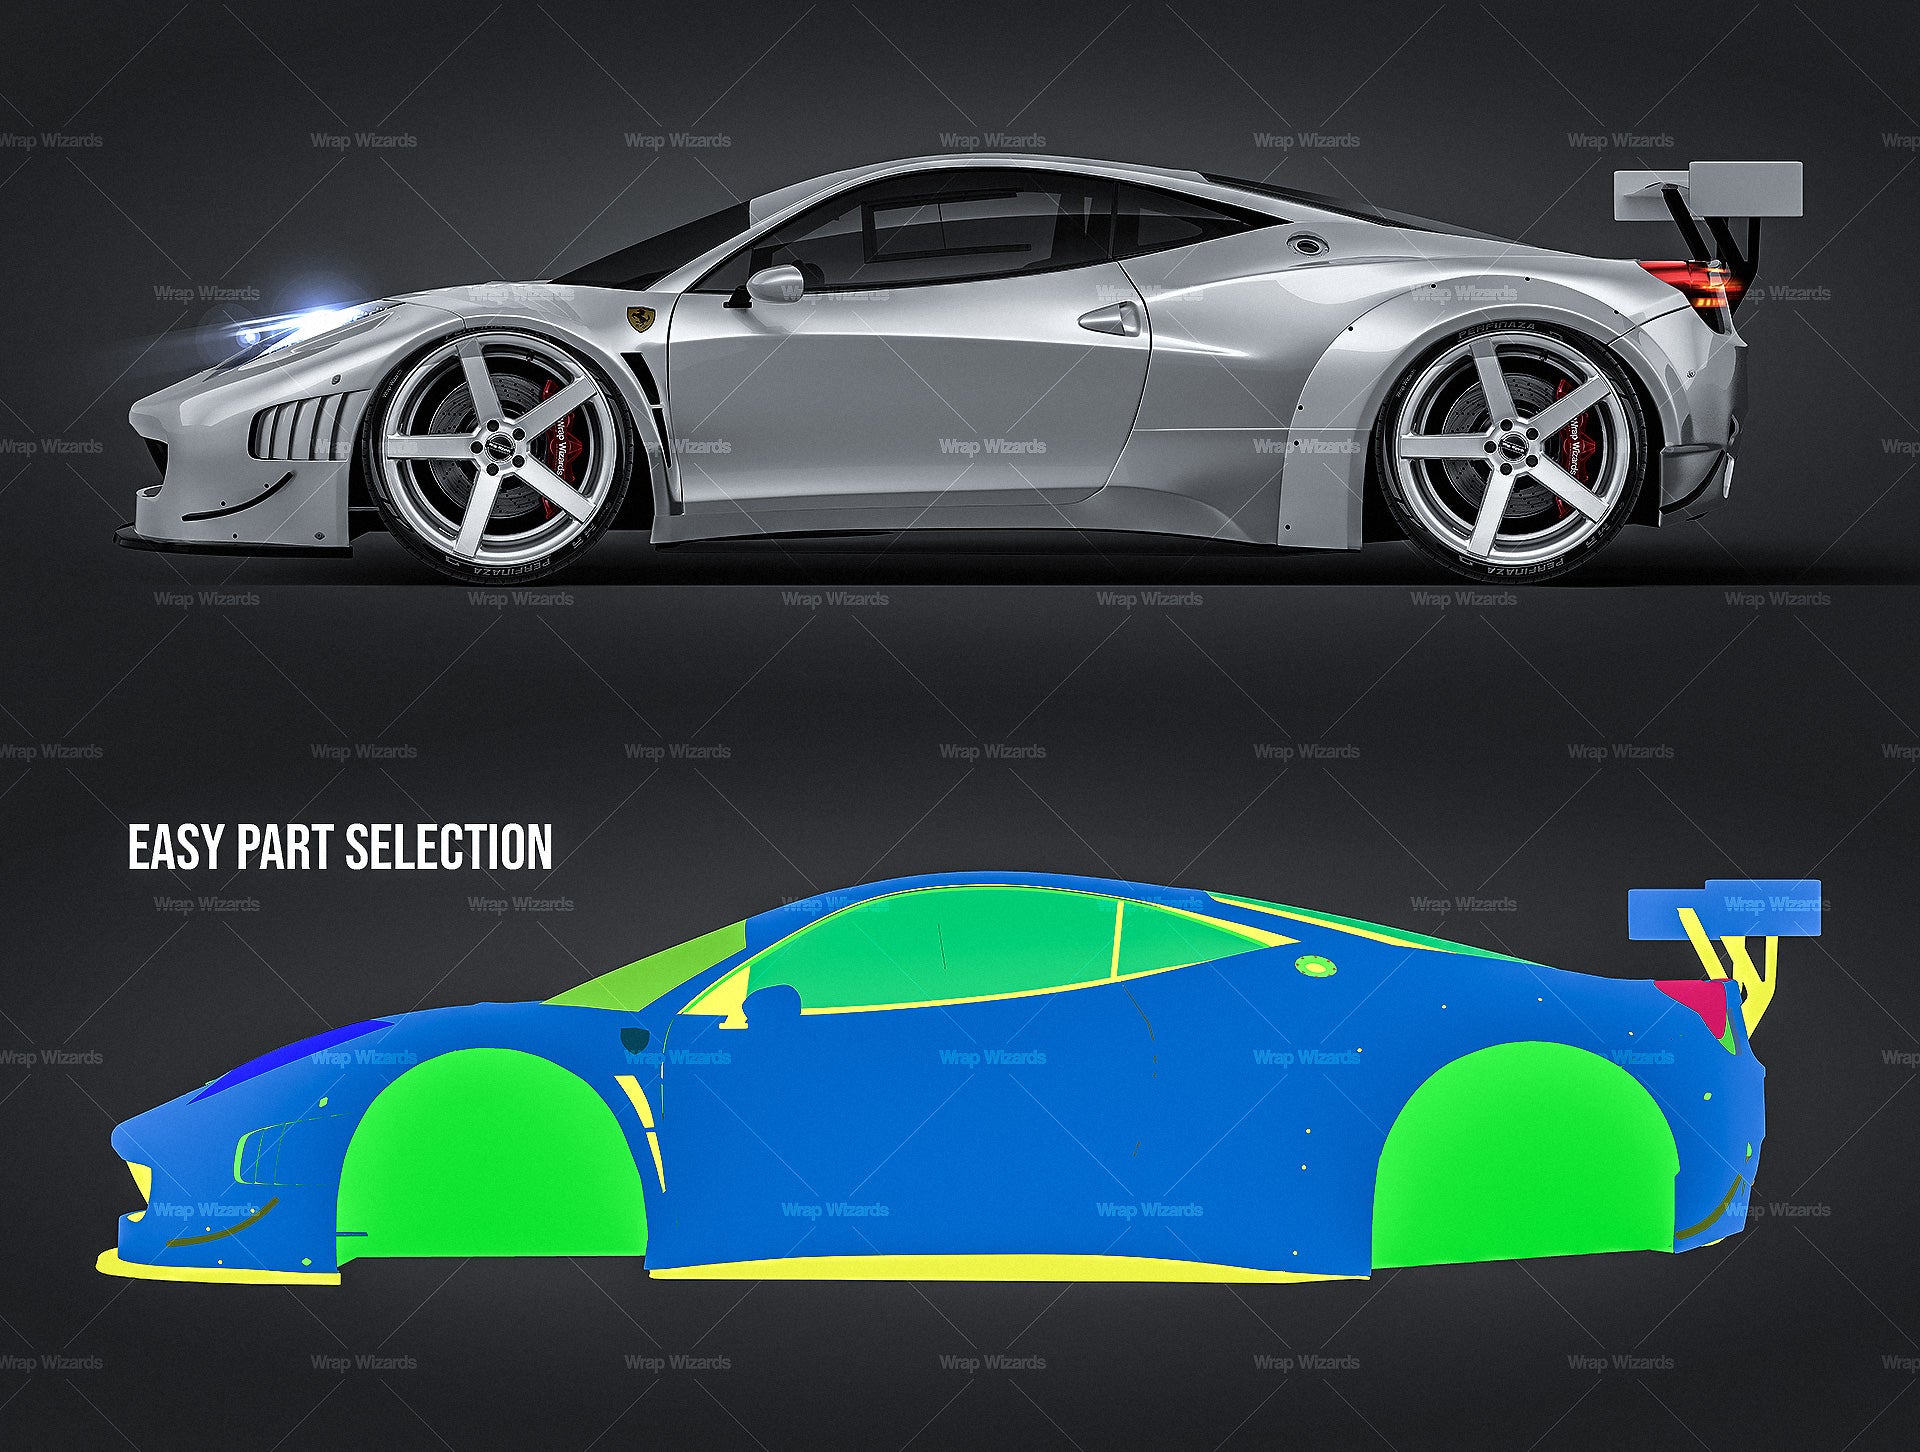 Ferrari 458 GT3 2014 glossy finish - all sides Car Mockup Template.psd